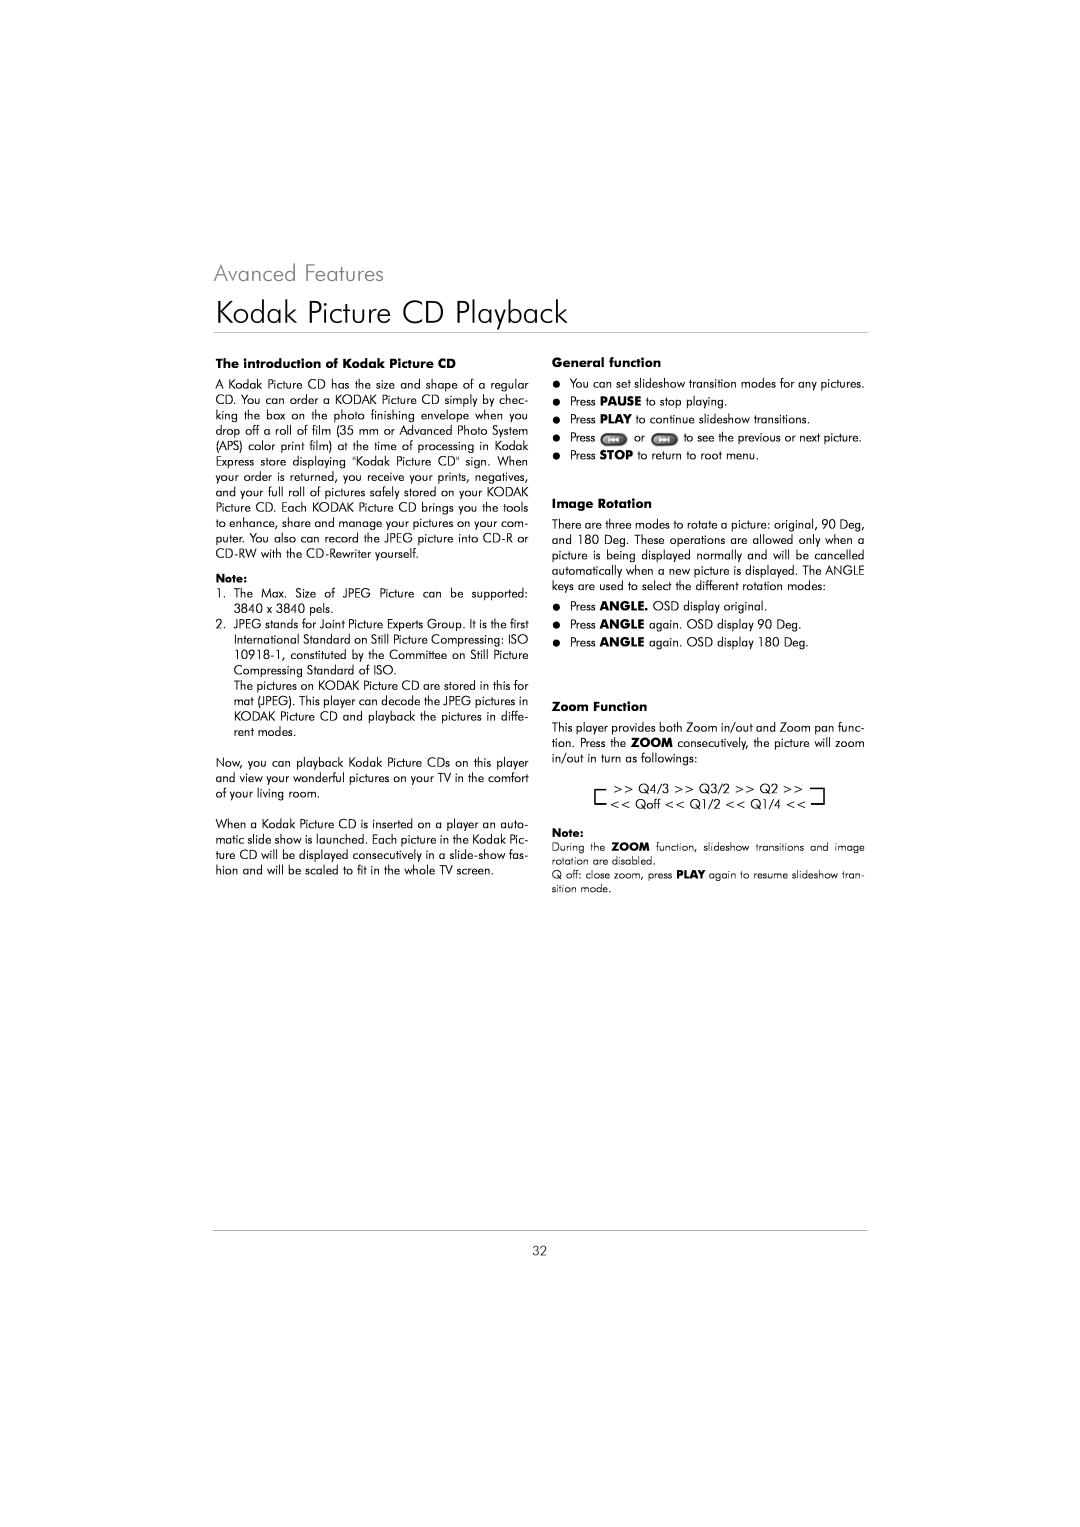 Kodak DVD 40 Kodak Picture CD Playback, Avanced Features, The introduction of Kodak Picture CD, General function 